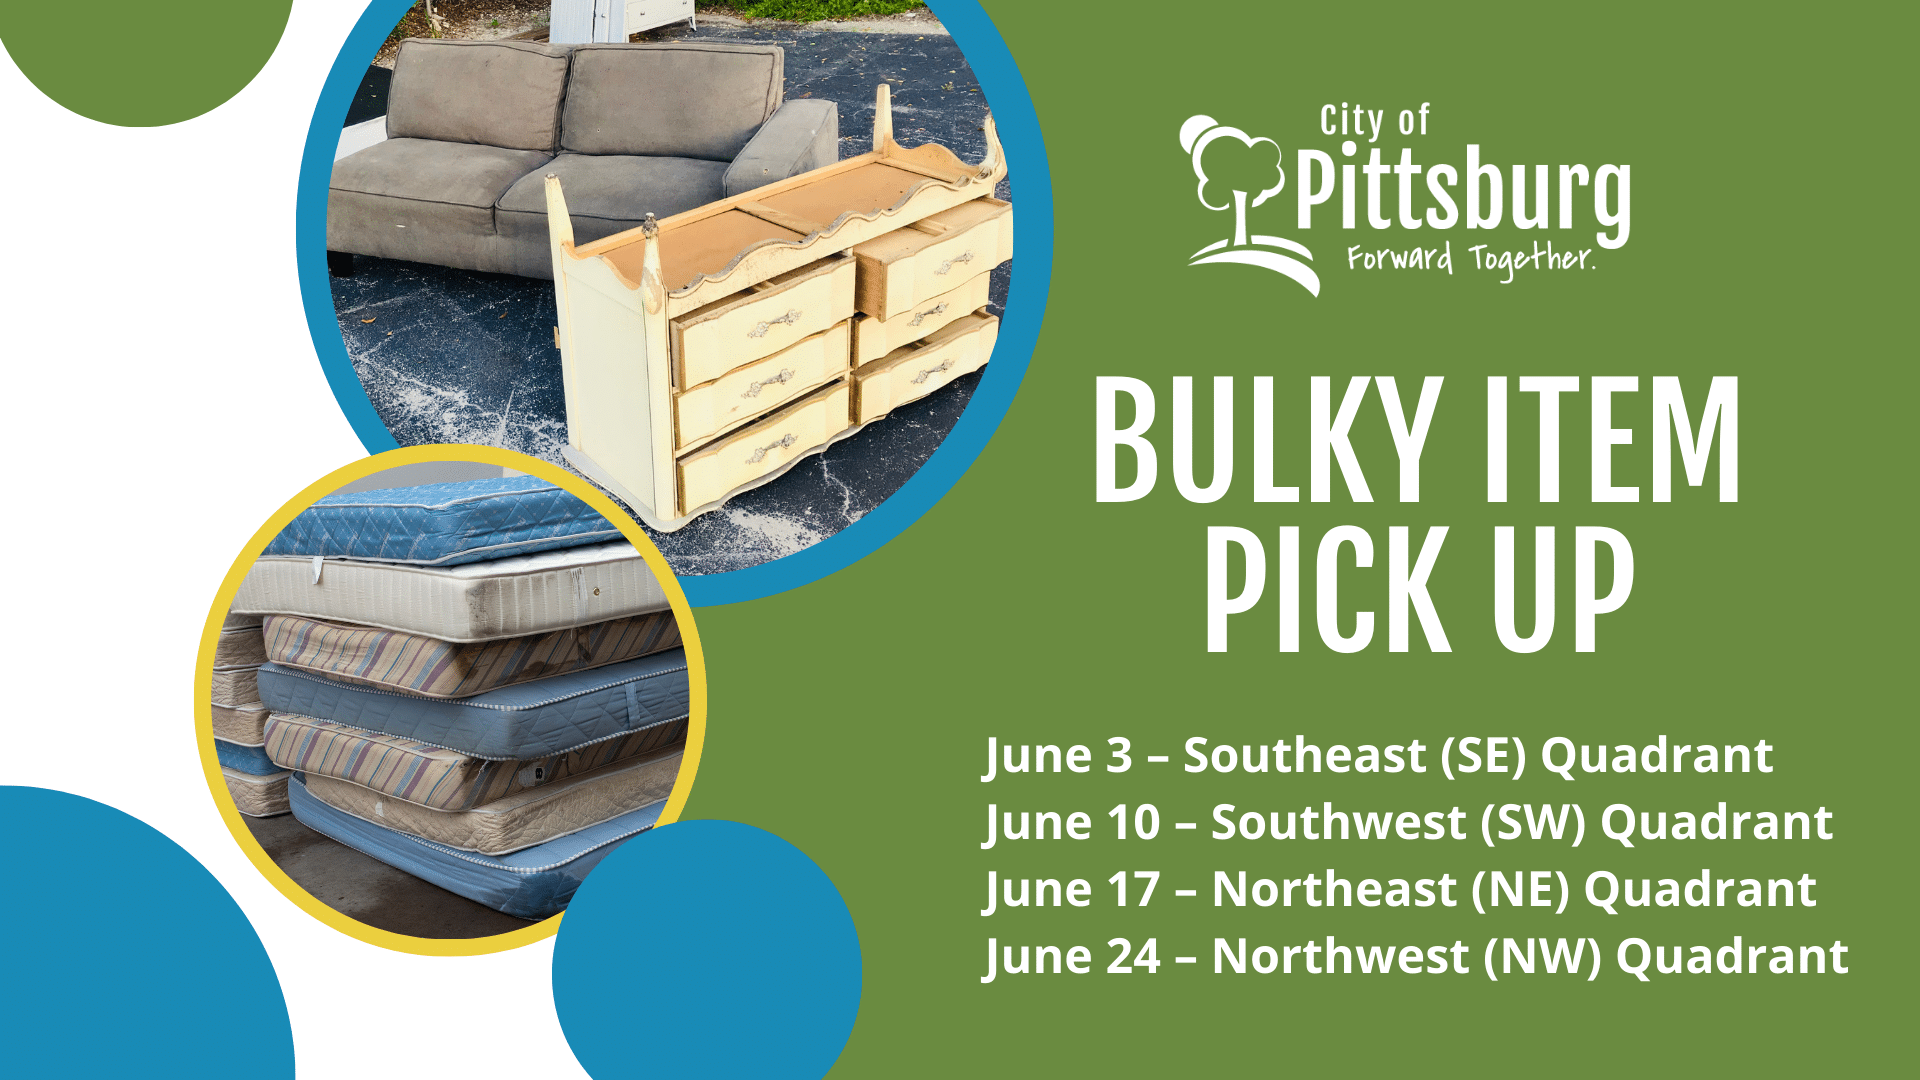 City of Pittsburg Bulky Item Pickup begins in June